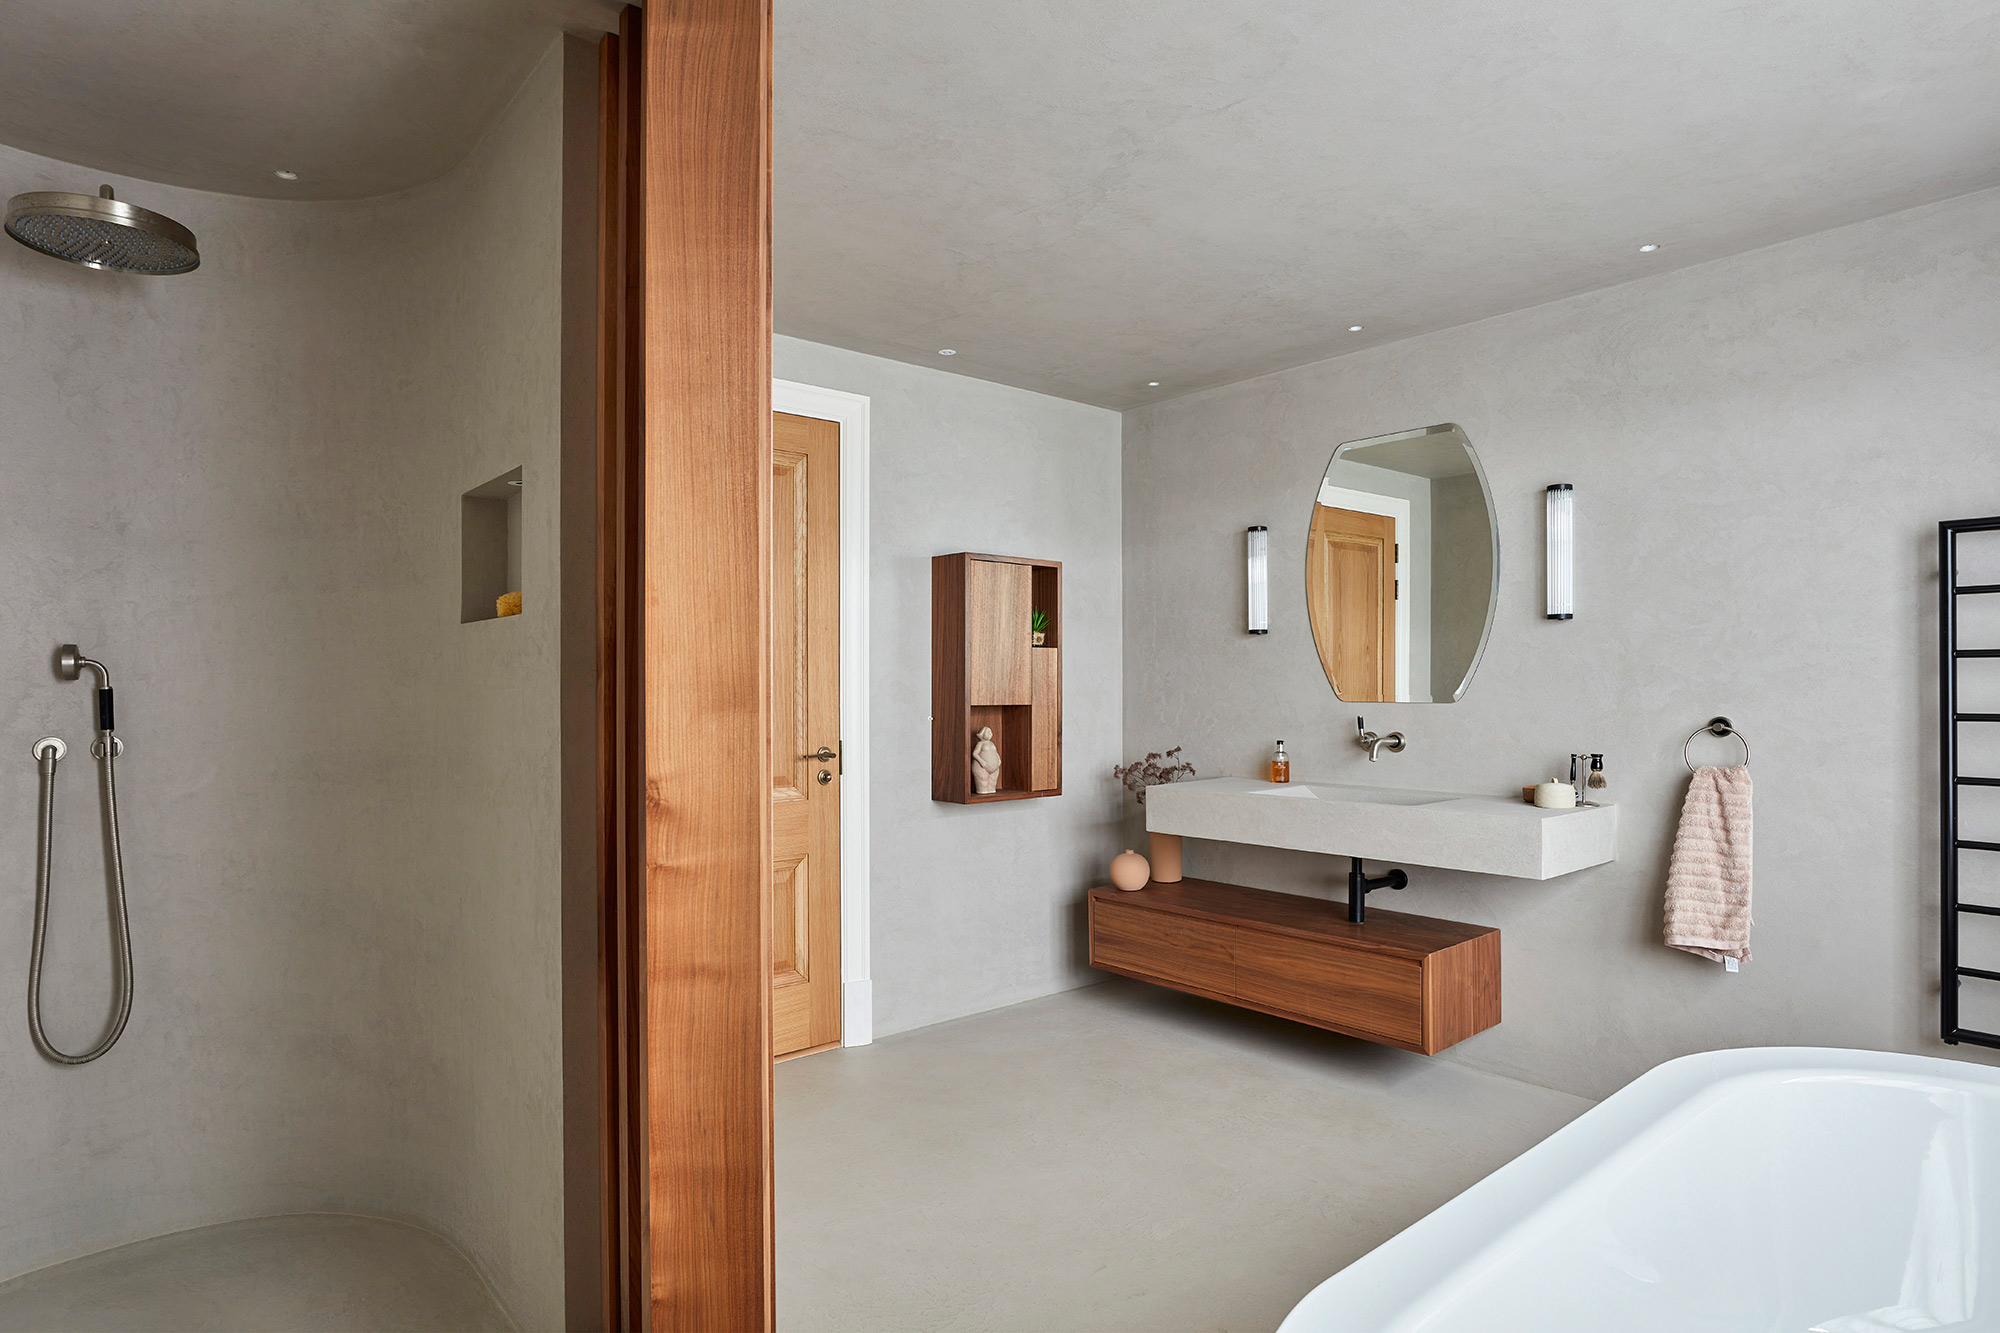 Bathroom - New build by KM Grant Surrey